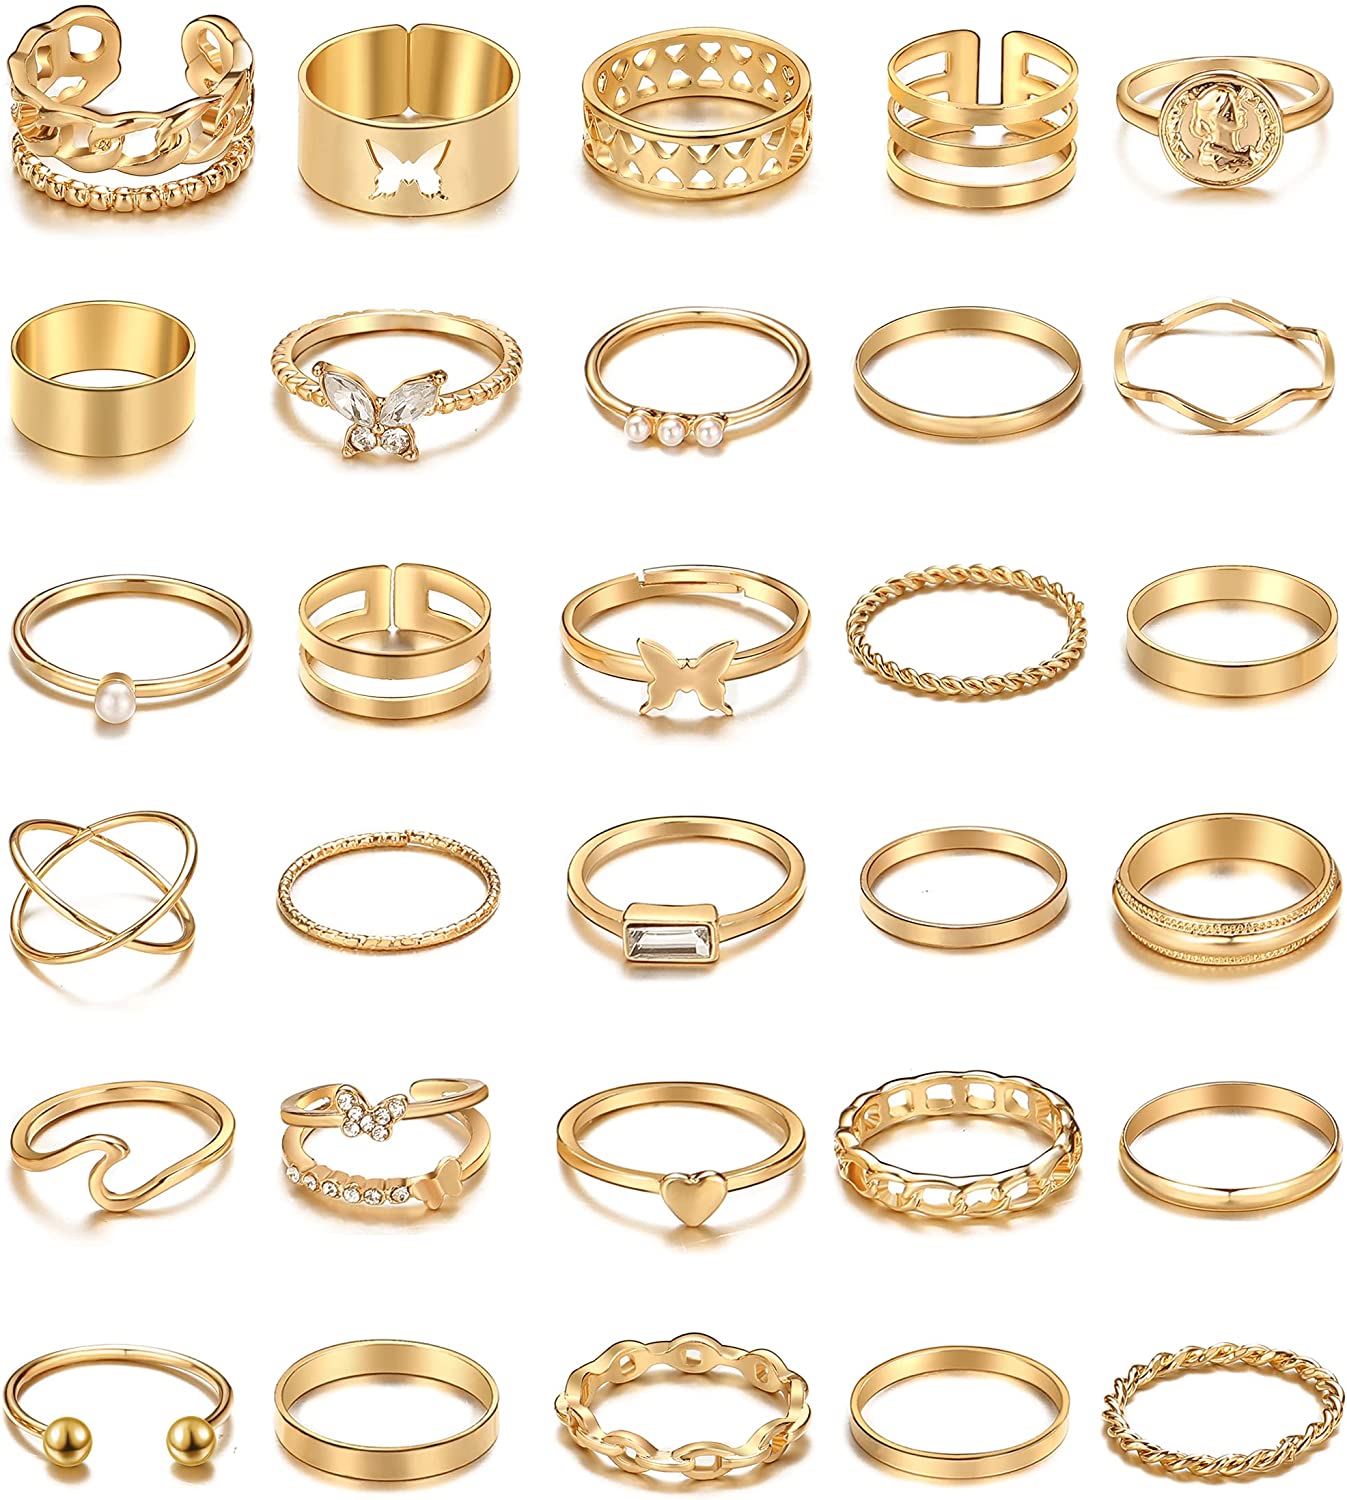 30 Pcs Vintage Gold Knuckle Rings Set, Boho Butterfly Snake Stackable Finger Rings for Women Girls, Silver Midi Rings Pack